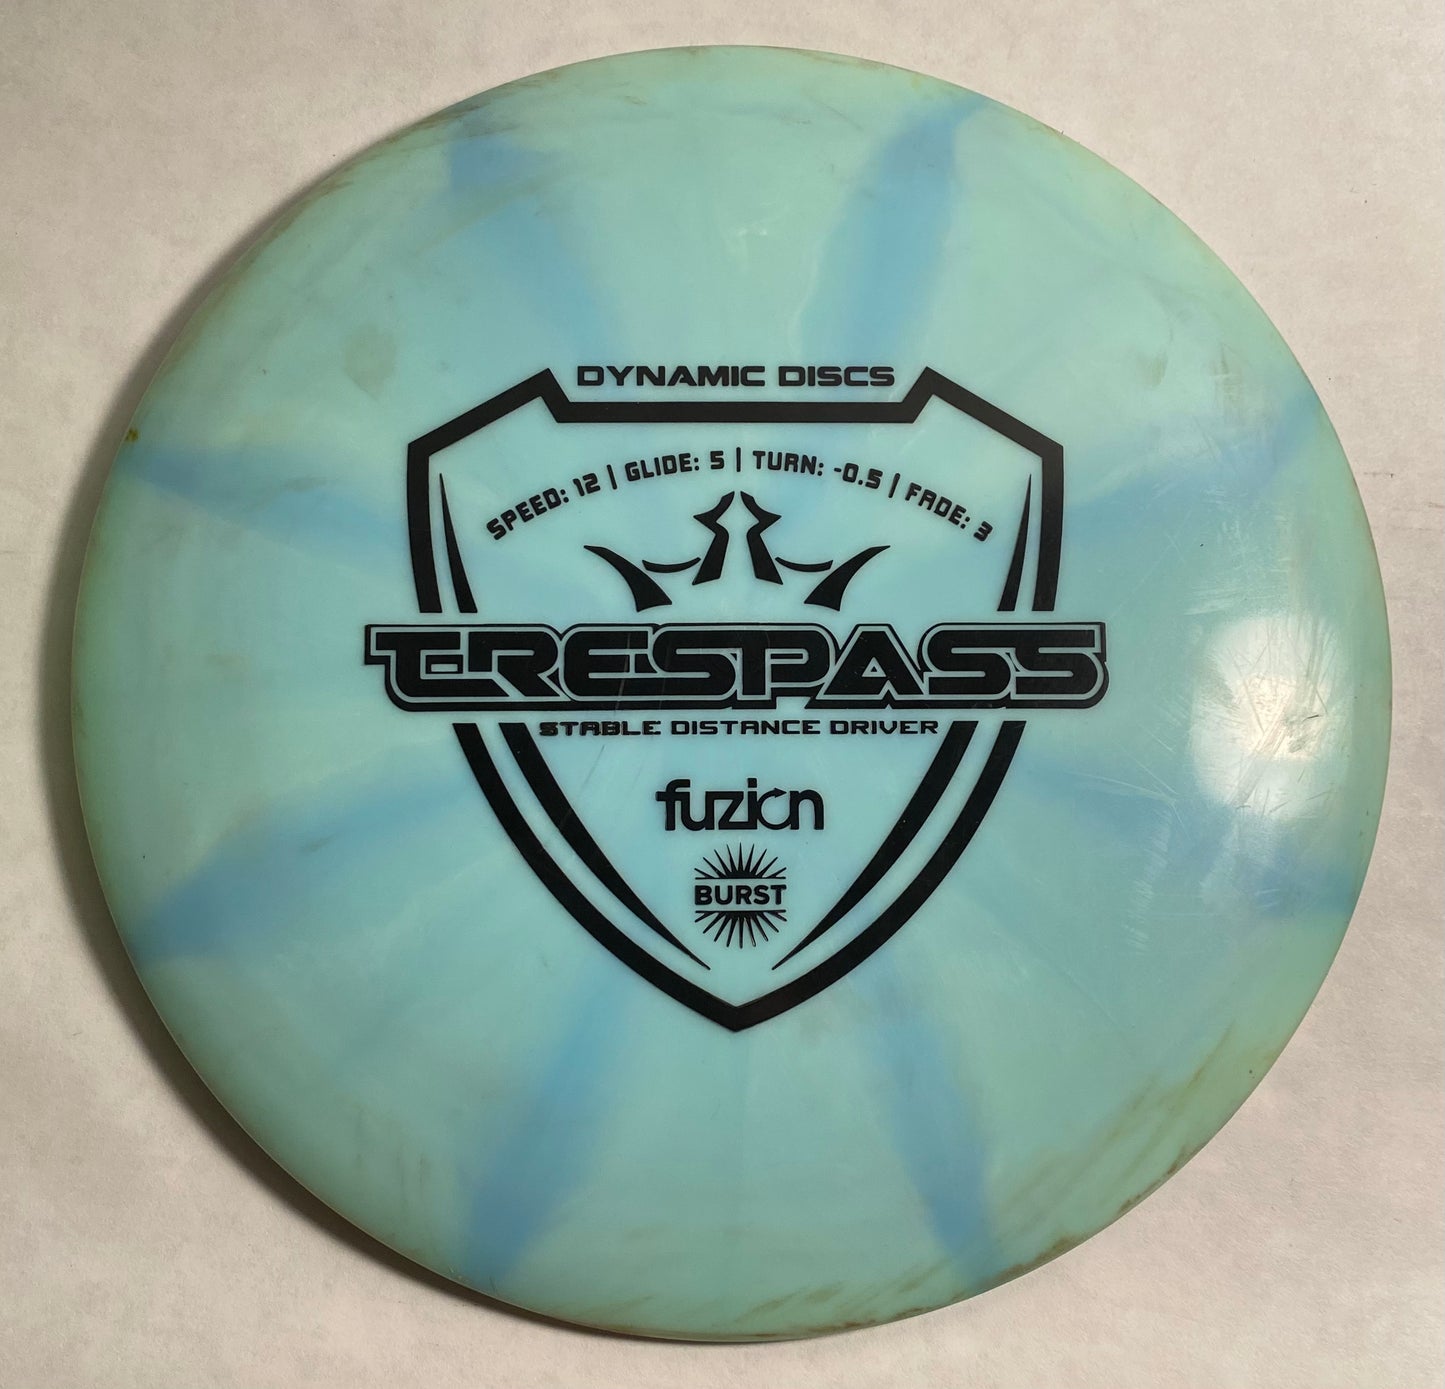 Dynamic Discs fuzion Trespass - 7/10 - 174g